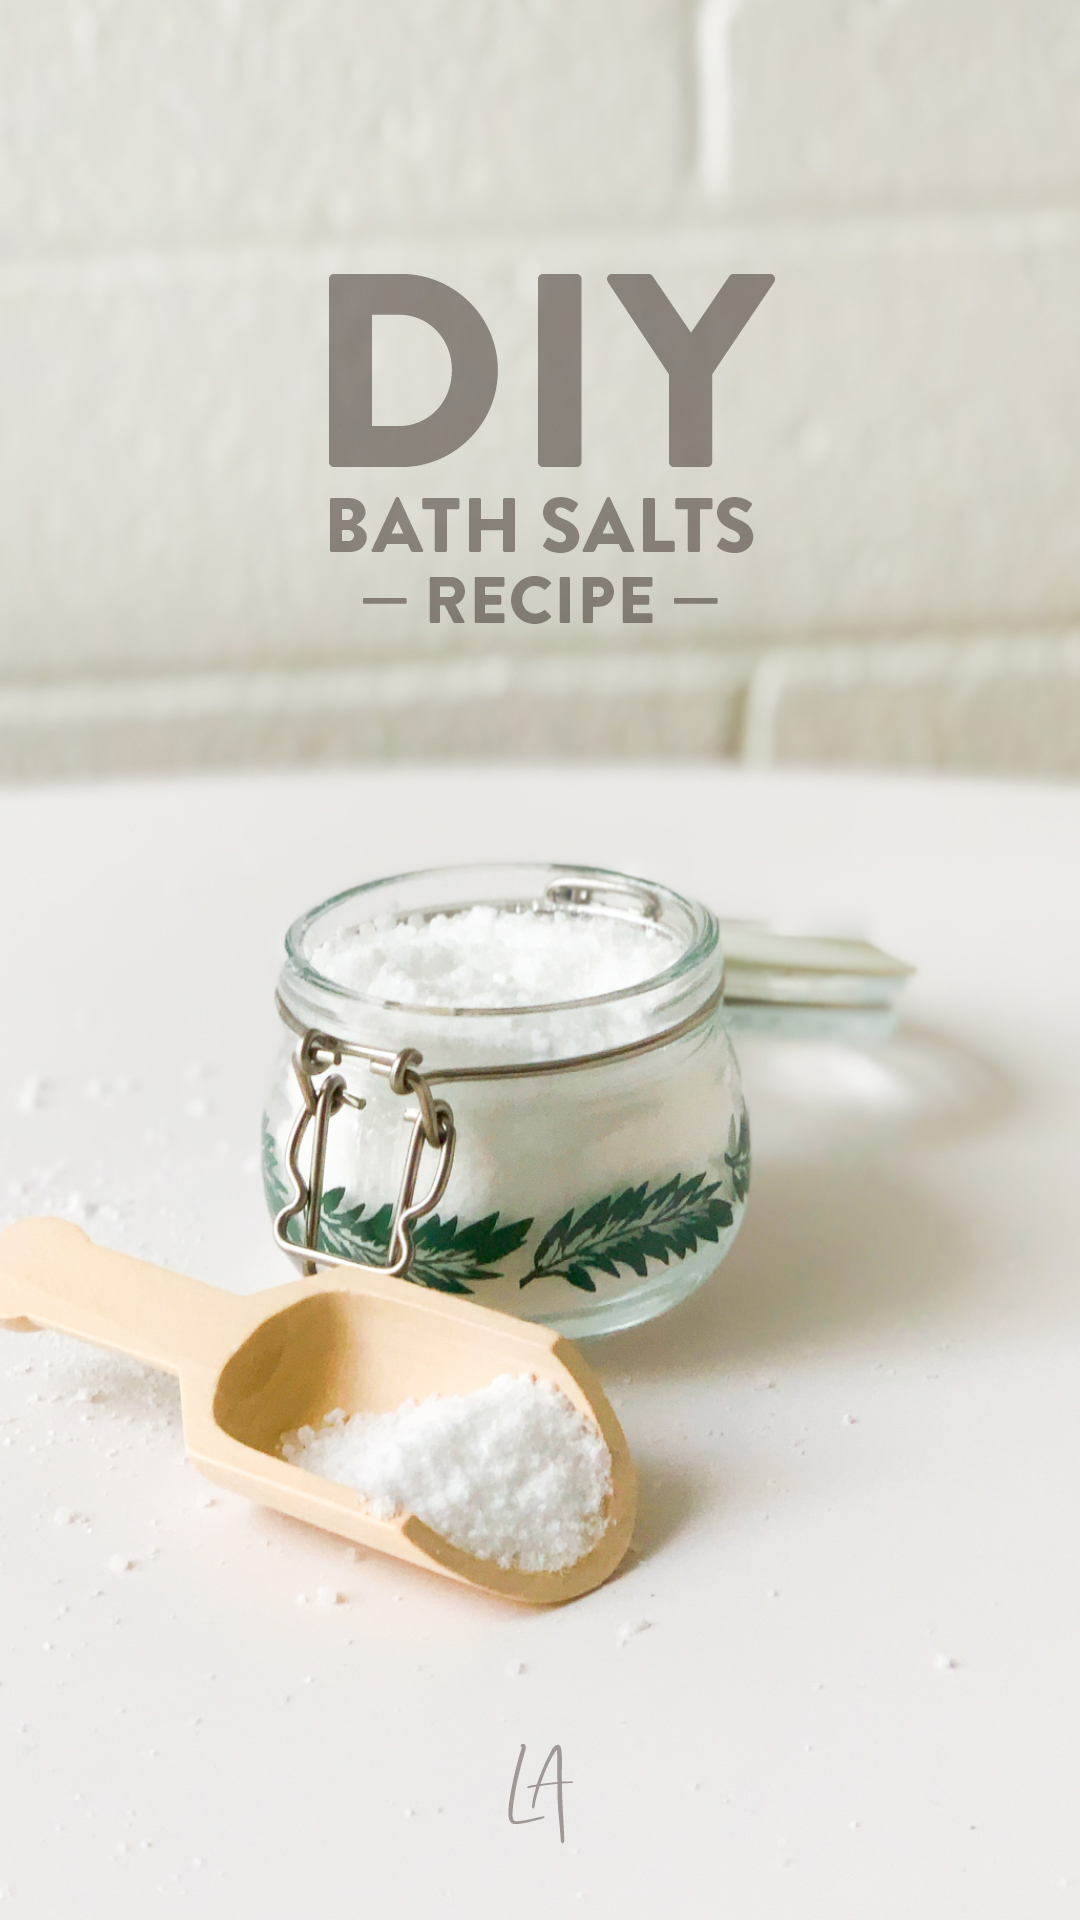 DIY Bath Salts recipe